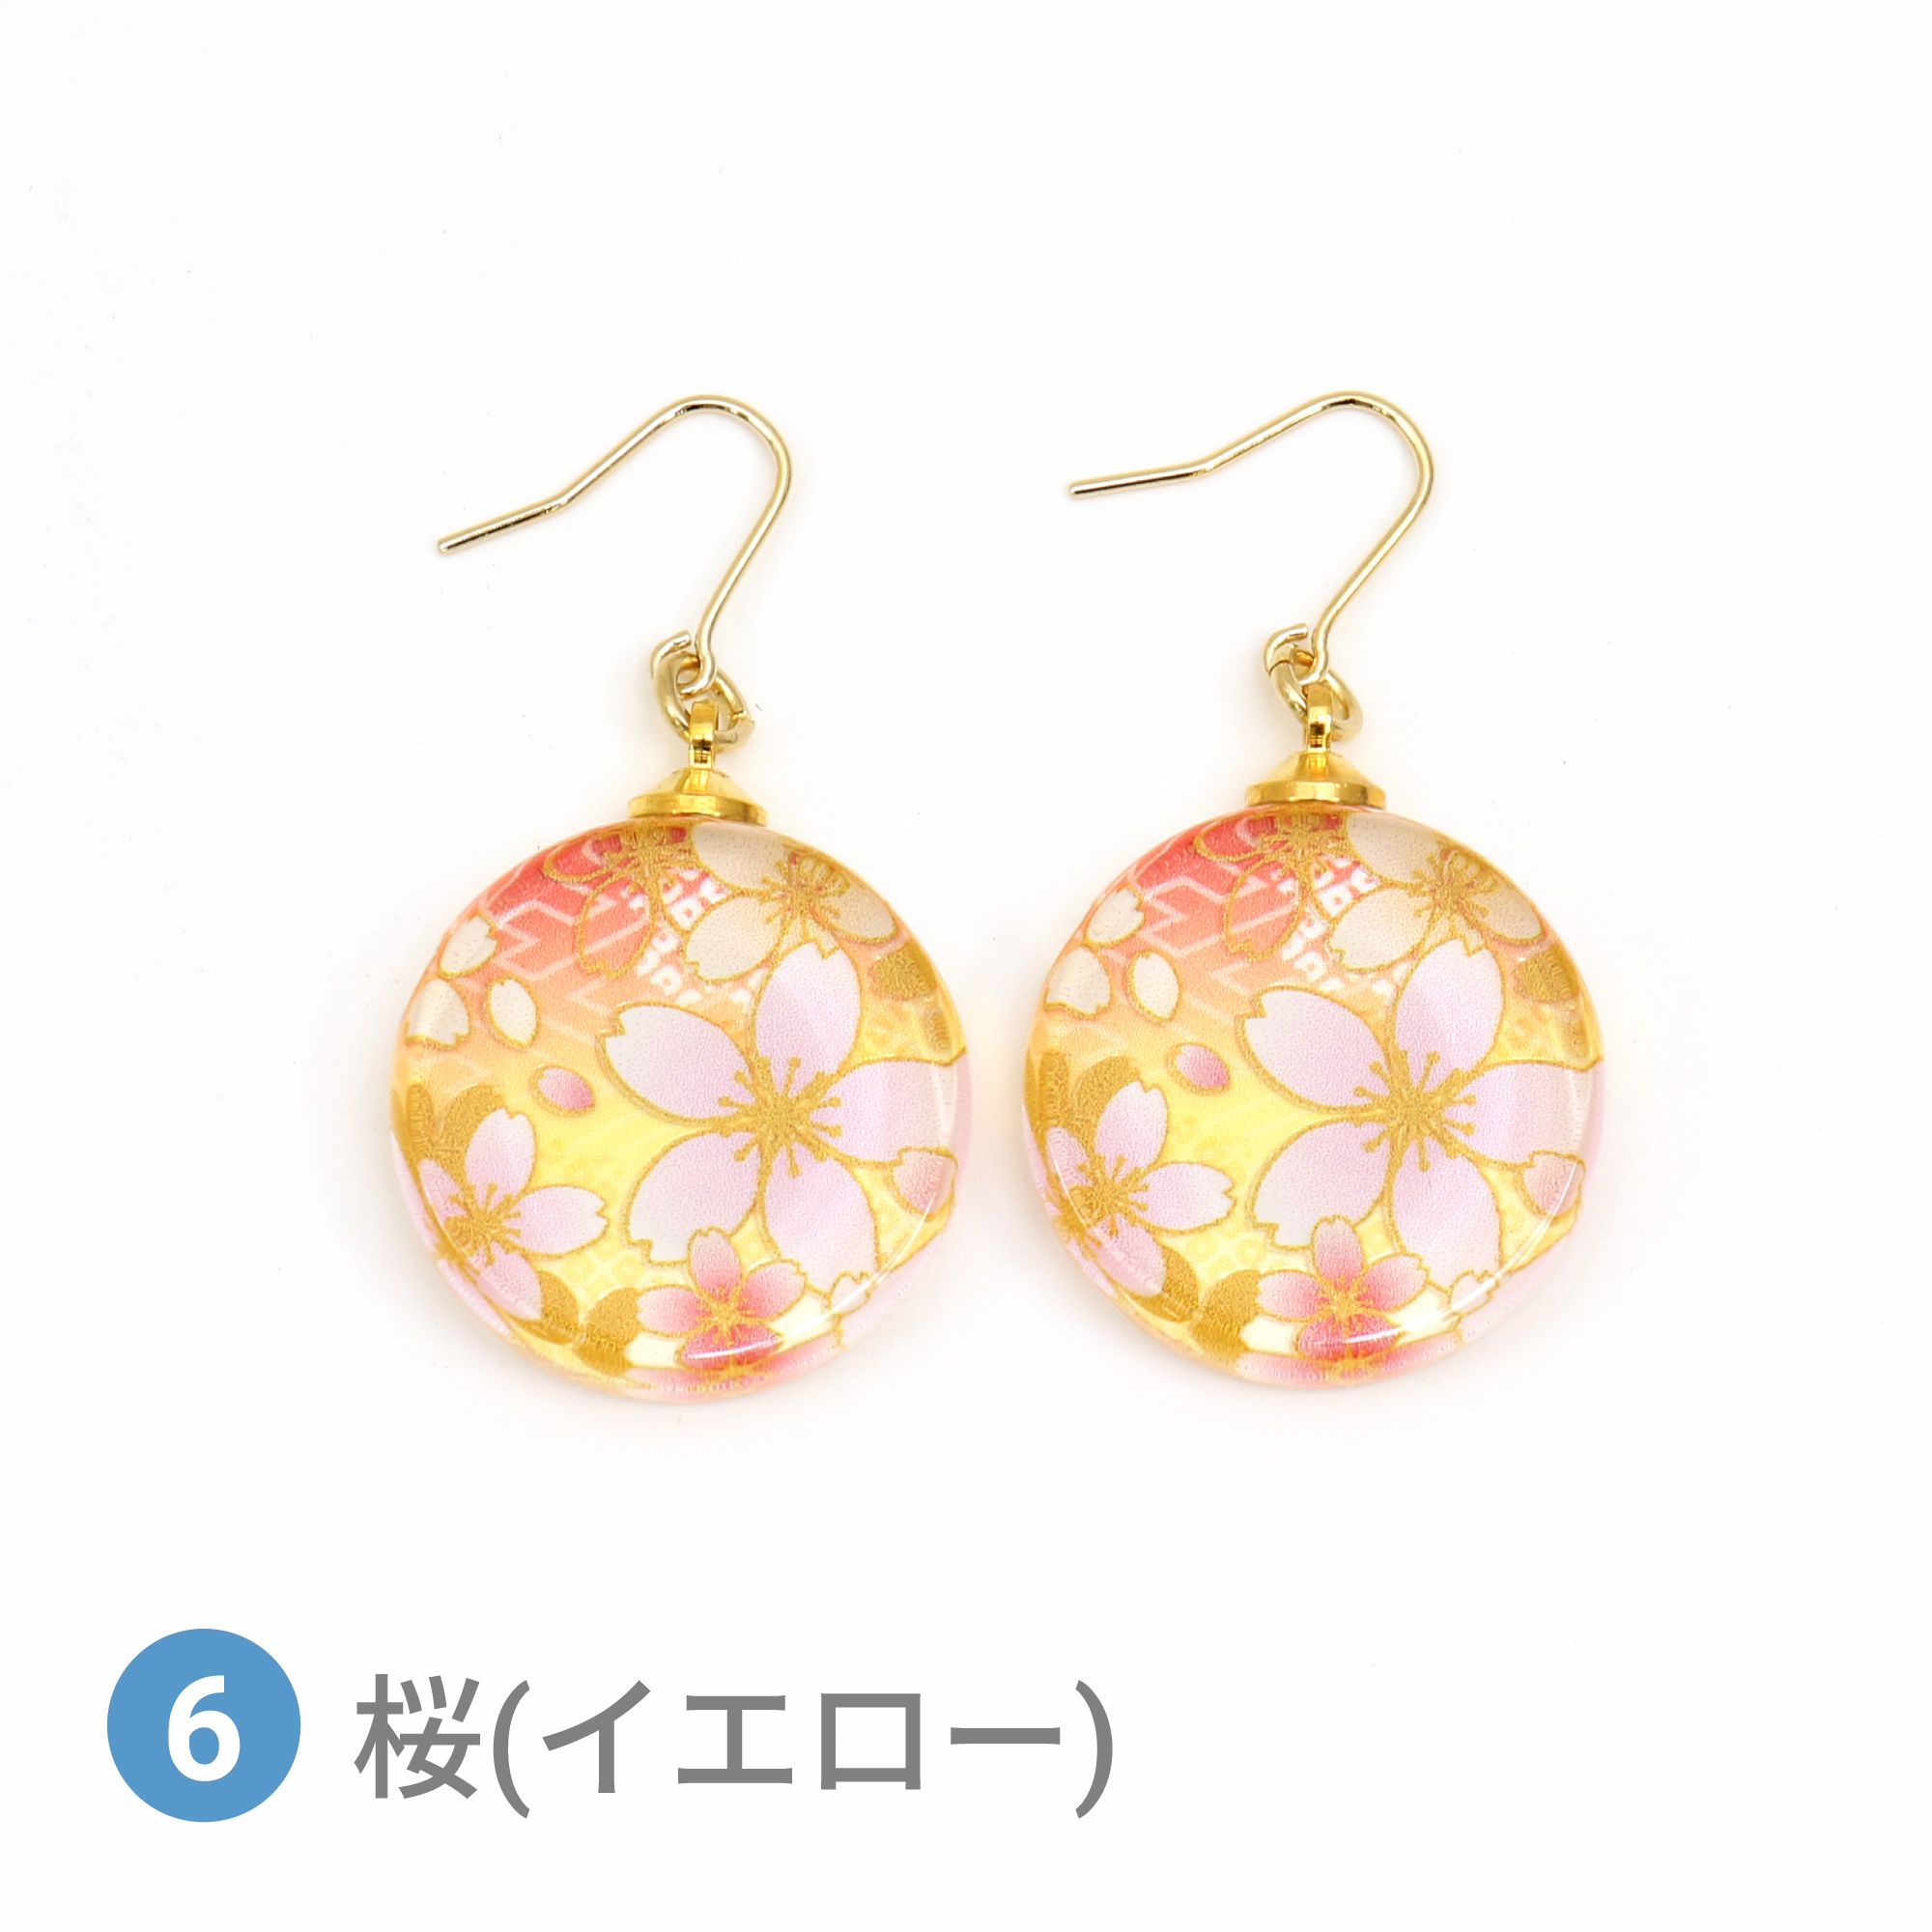 Glass accessories Pierced Earring WABANA Cherry blossom yellow round shape